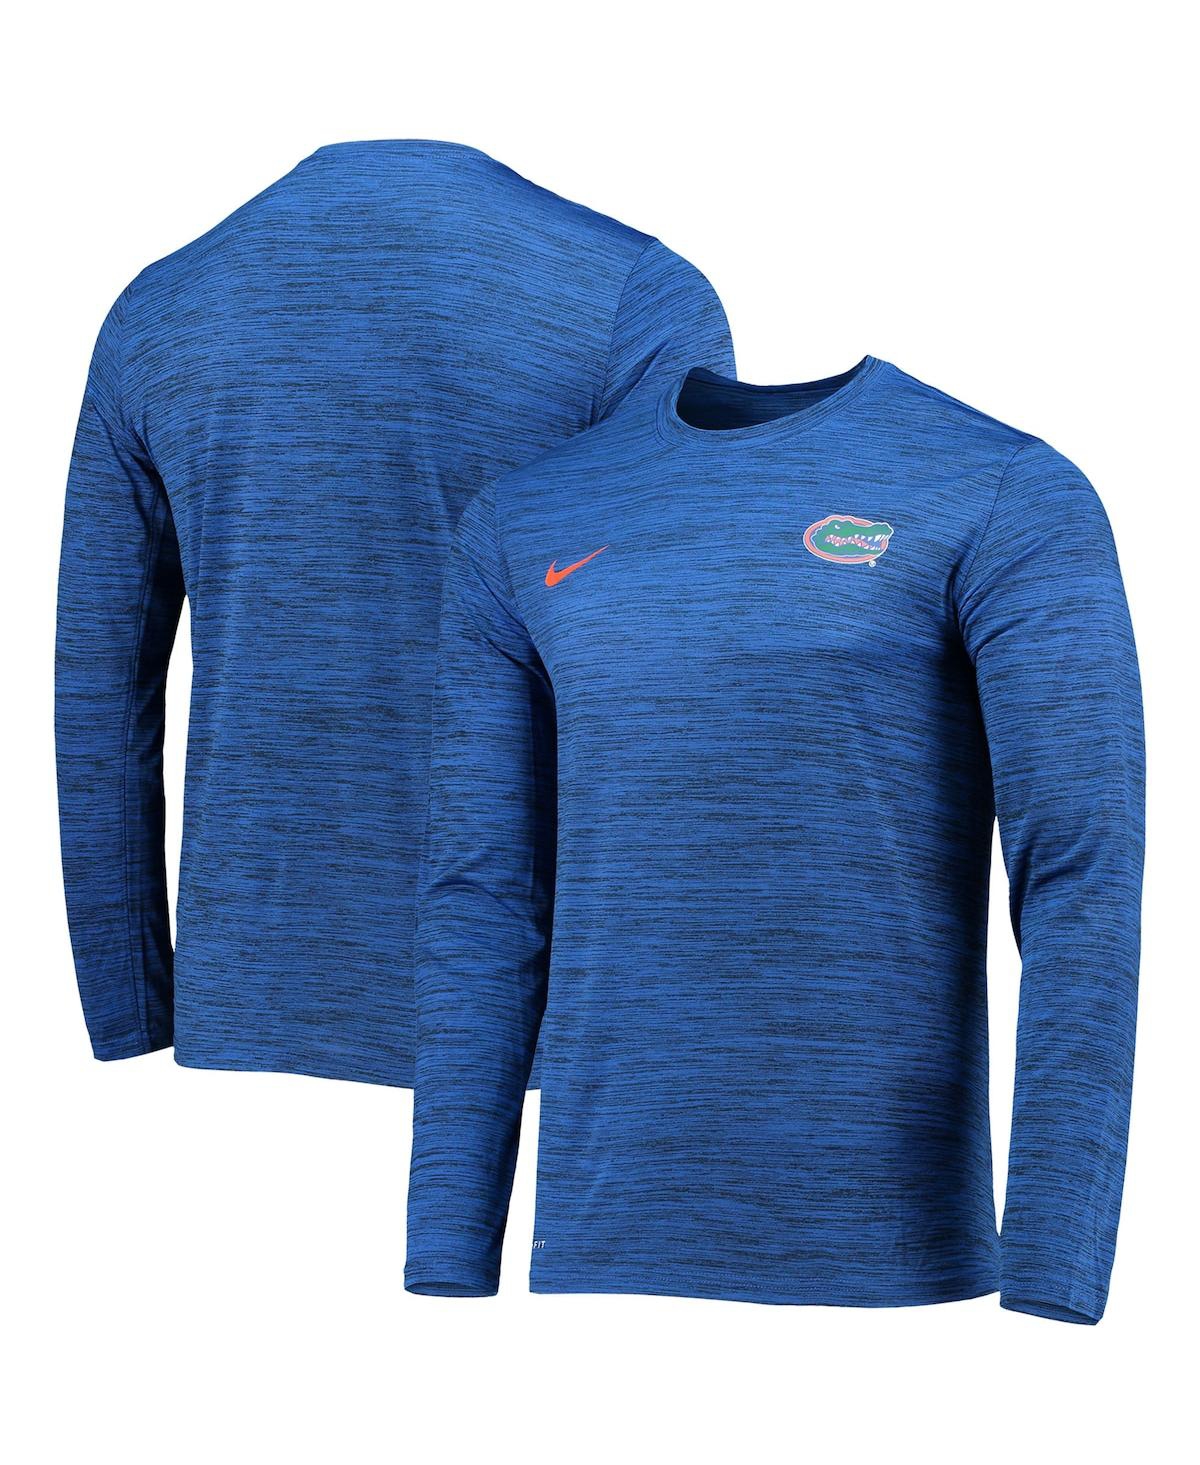 Men's Nike Royal Florida Gators Velocity Legend Performance Long Sleeve T-shirt